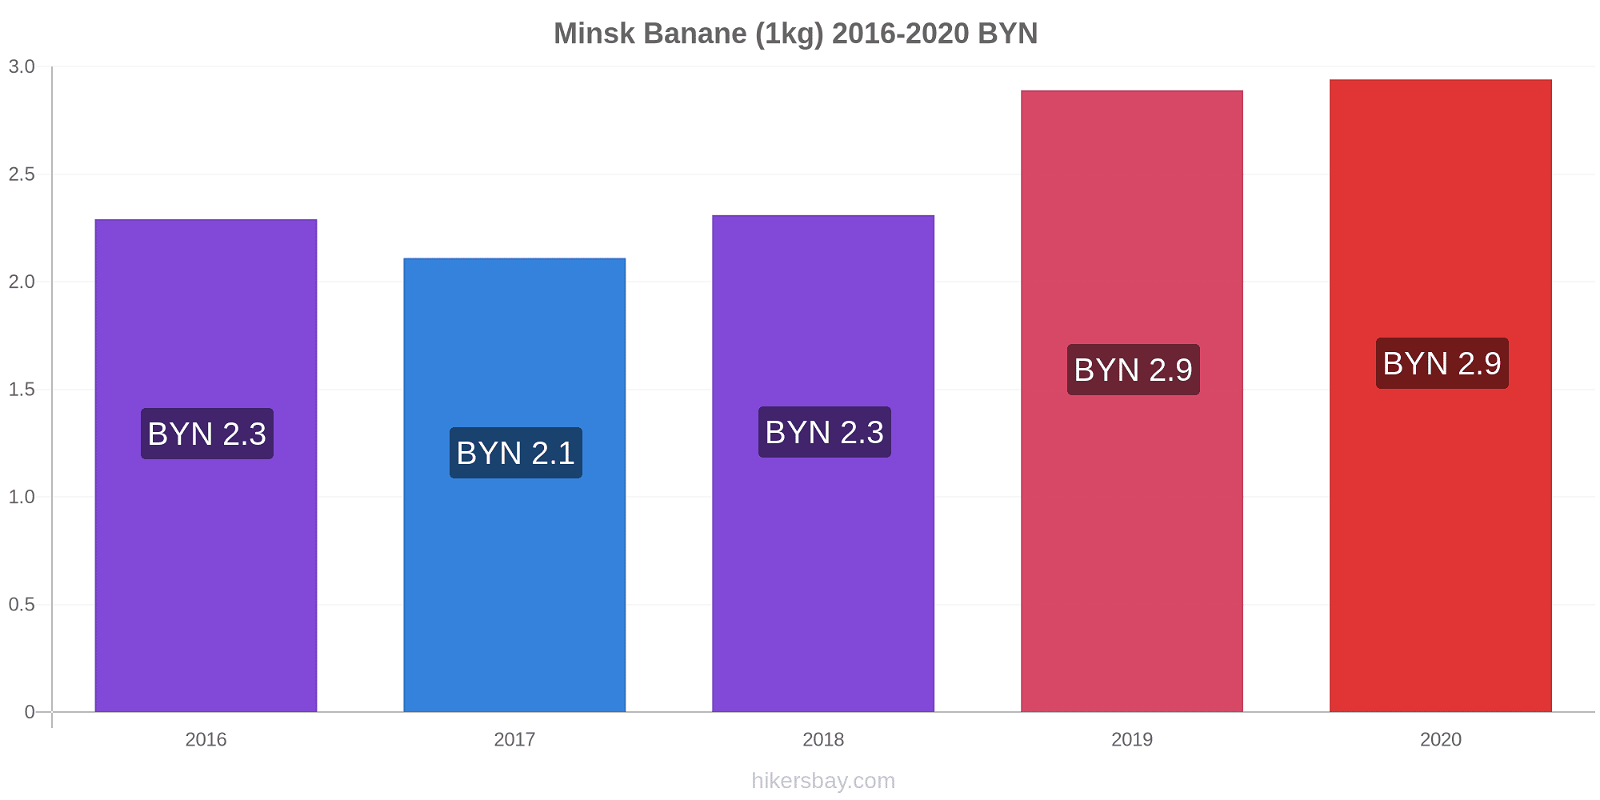 Minsk variazioni di prezzo Banana (1kg) hikersbay.com